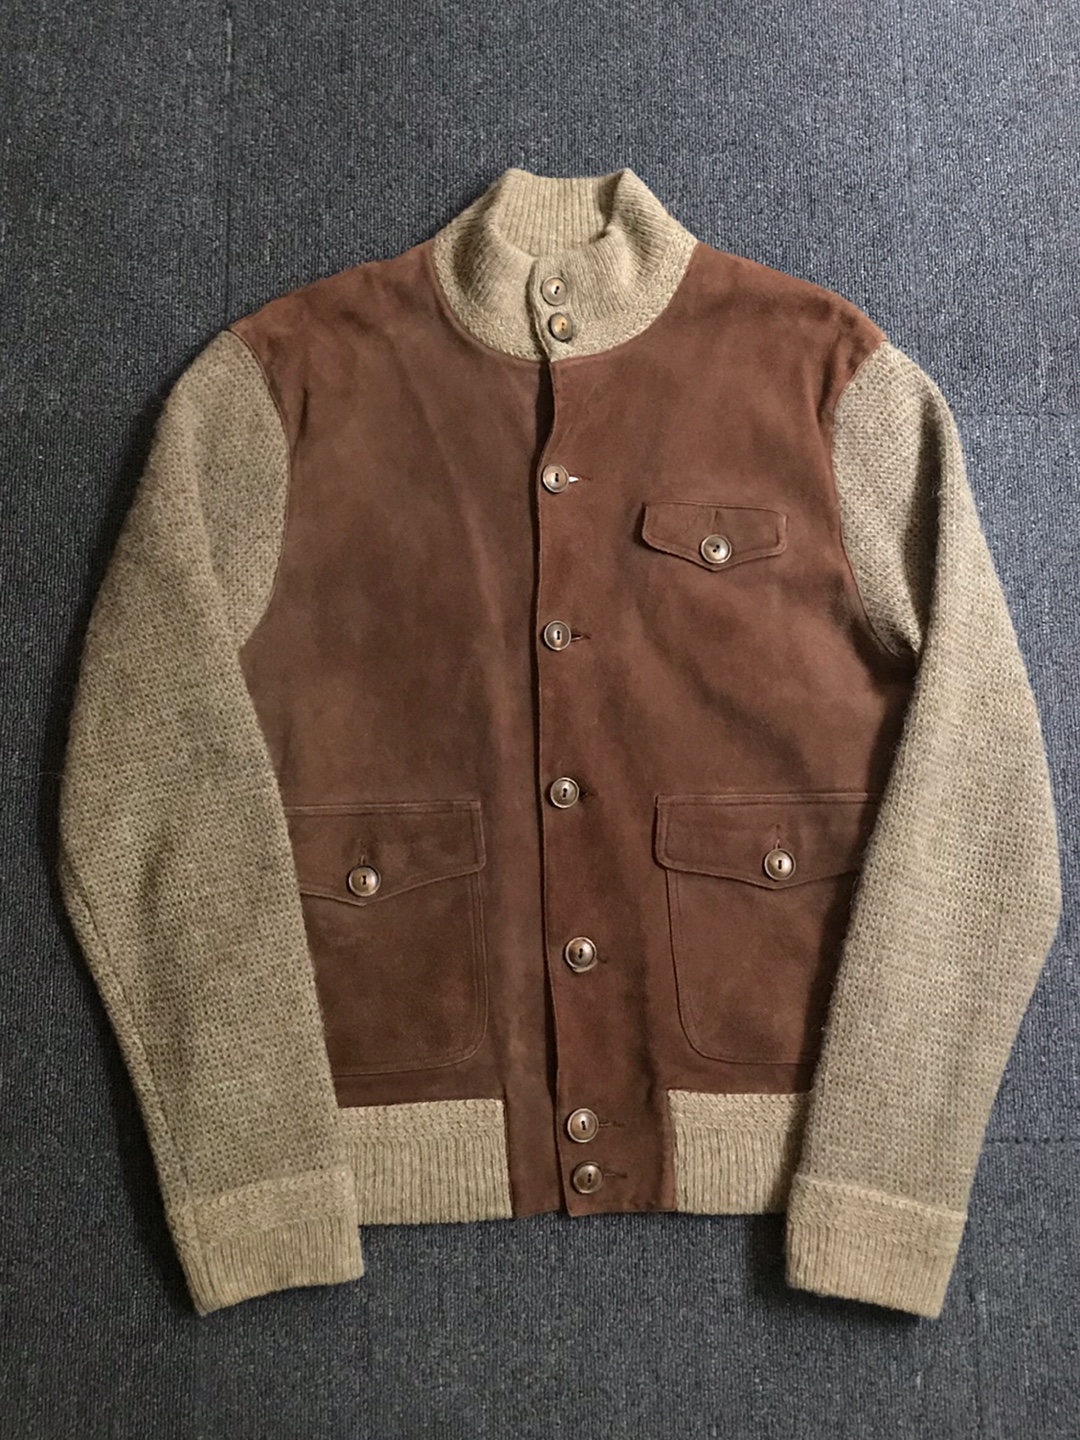 Polo RL alpaca/wool slv leather jacket (L size, ~103 추천))